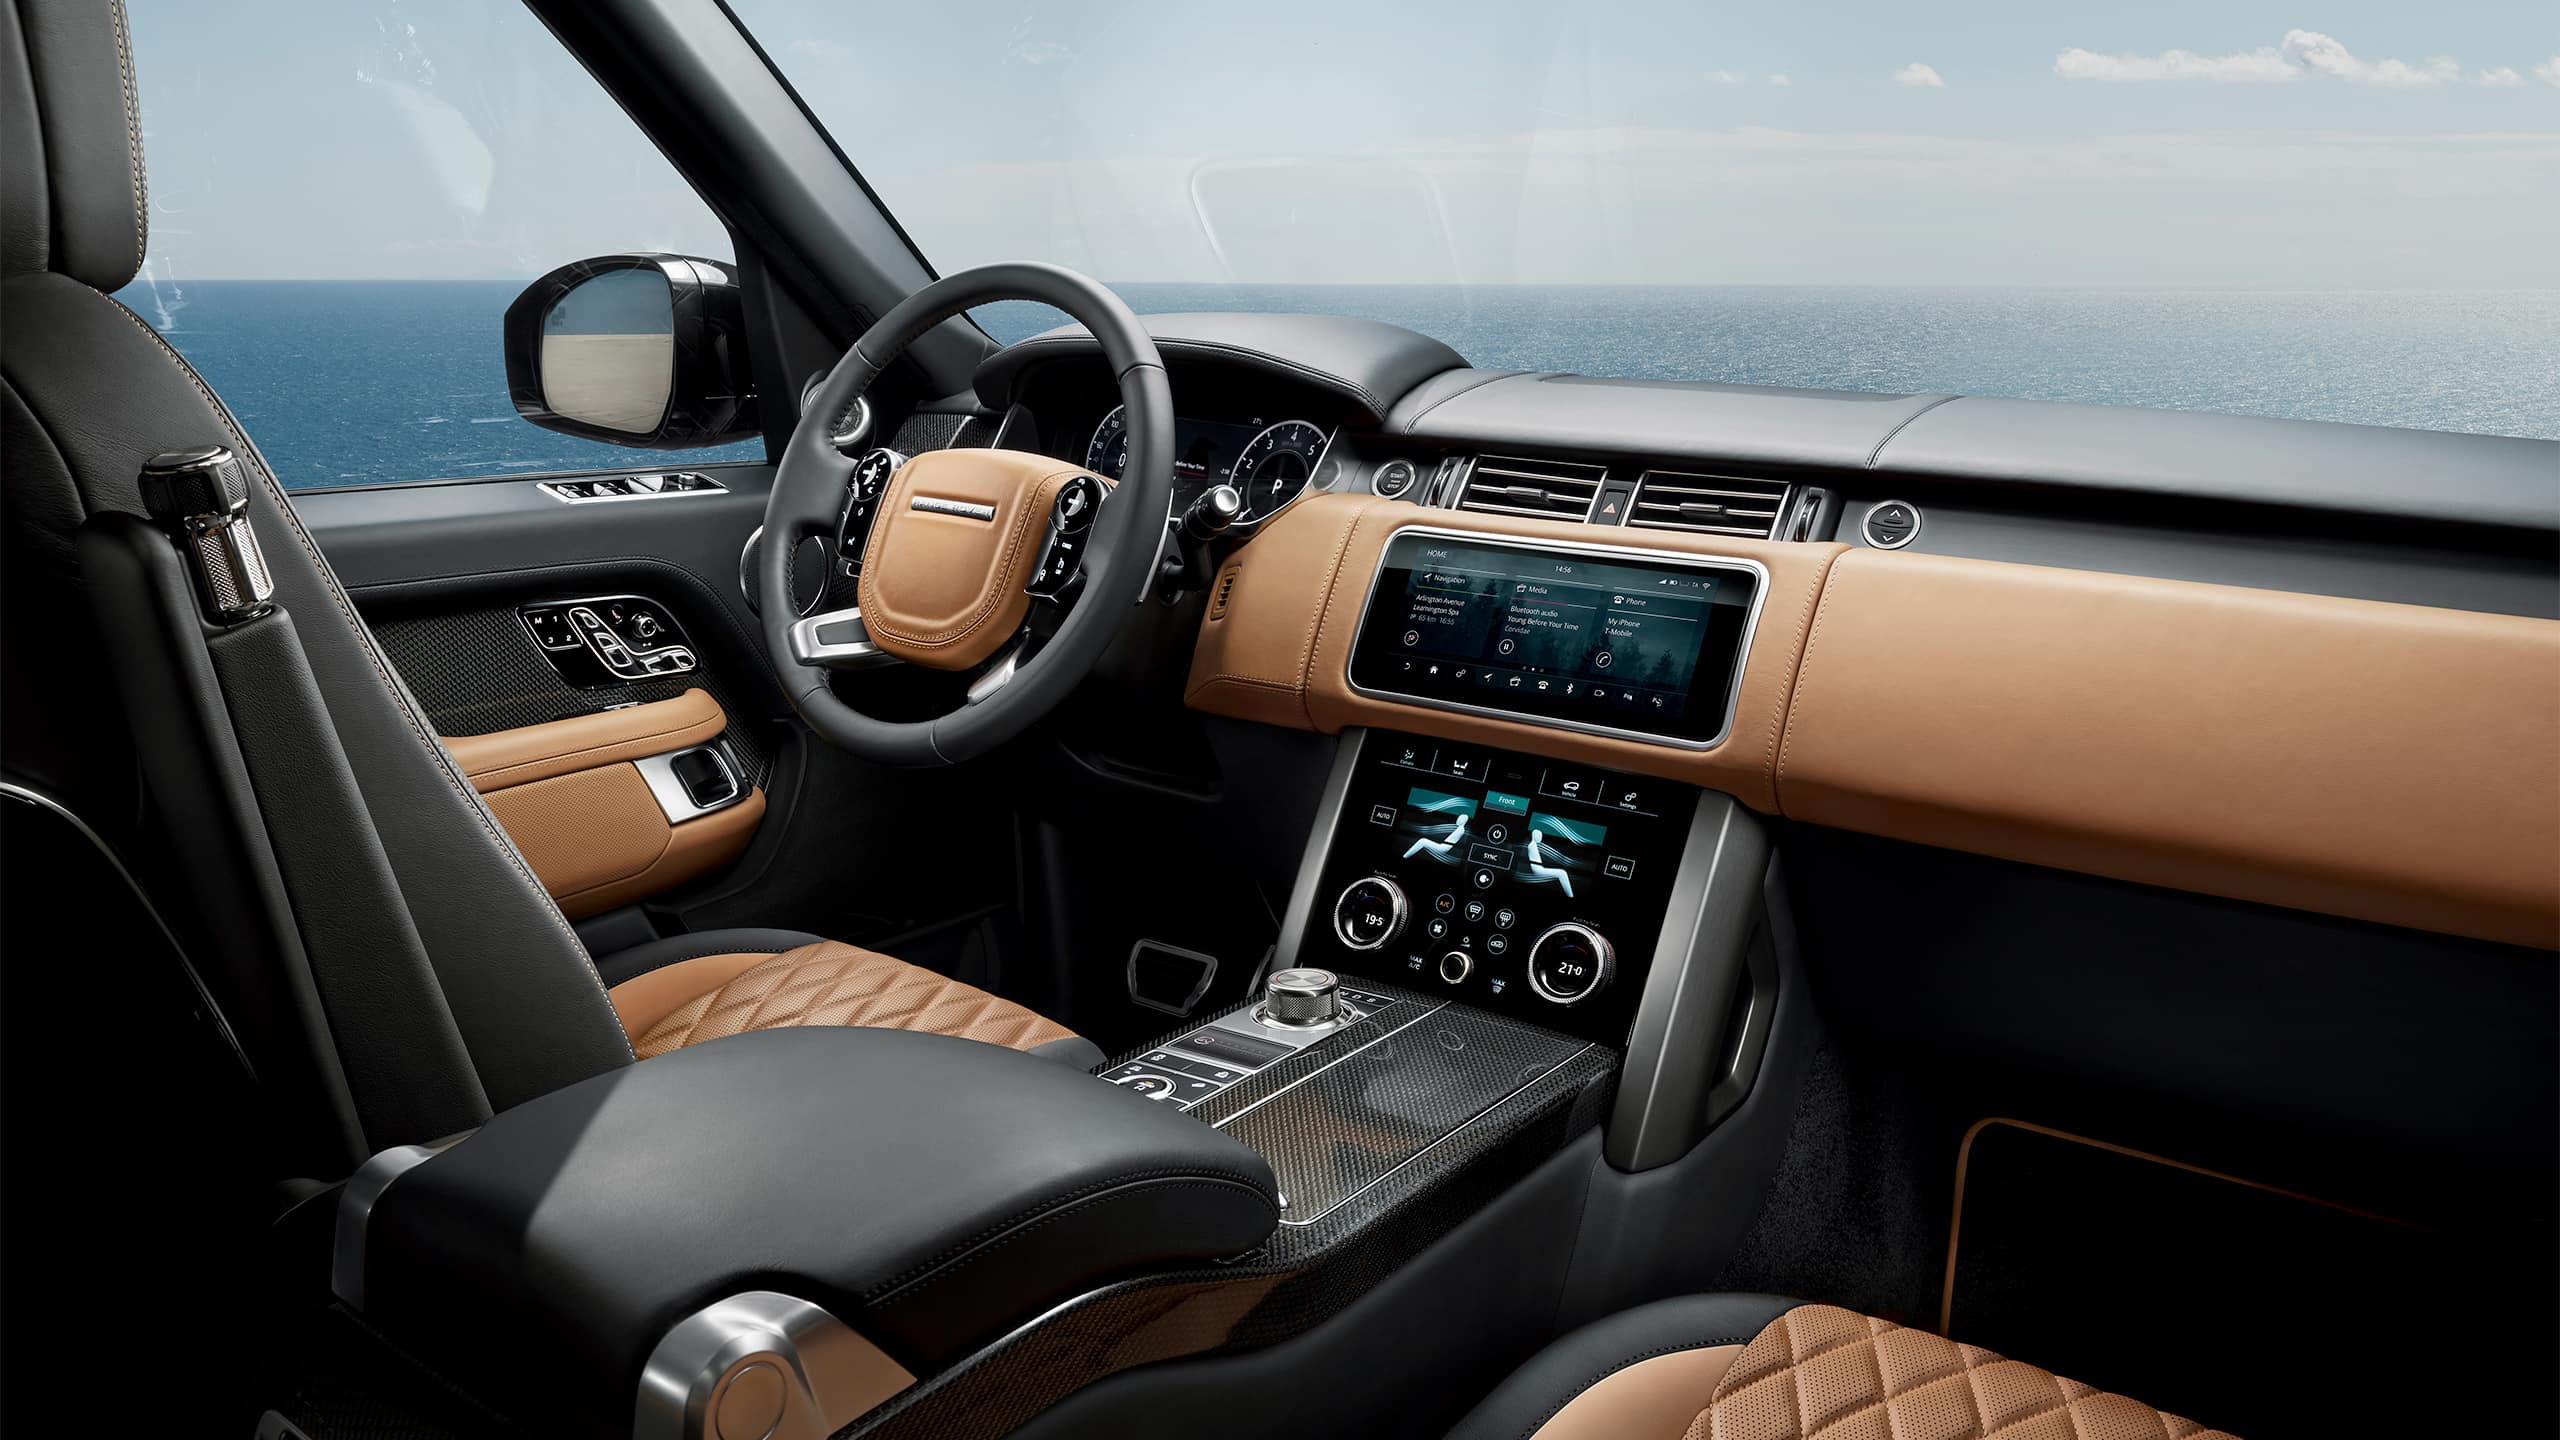 Range Rover SV Dashboard View